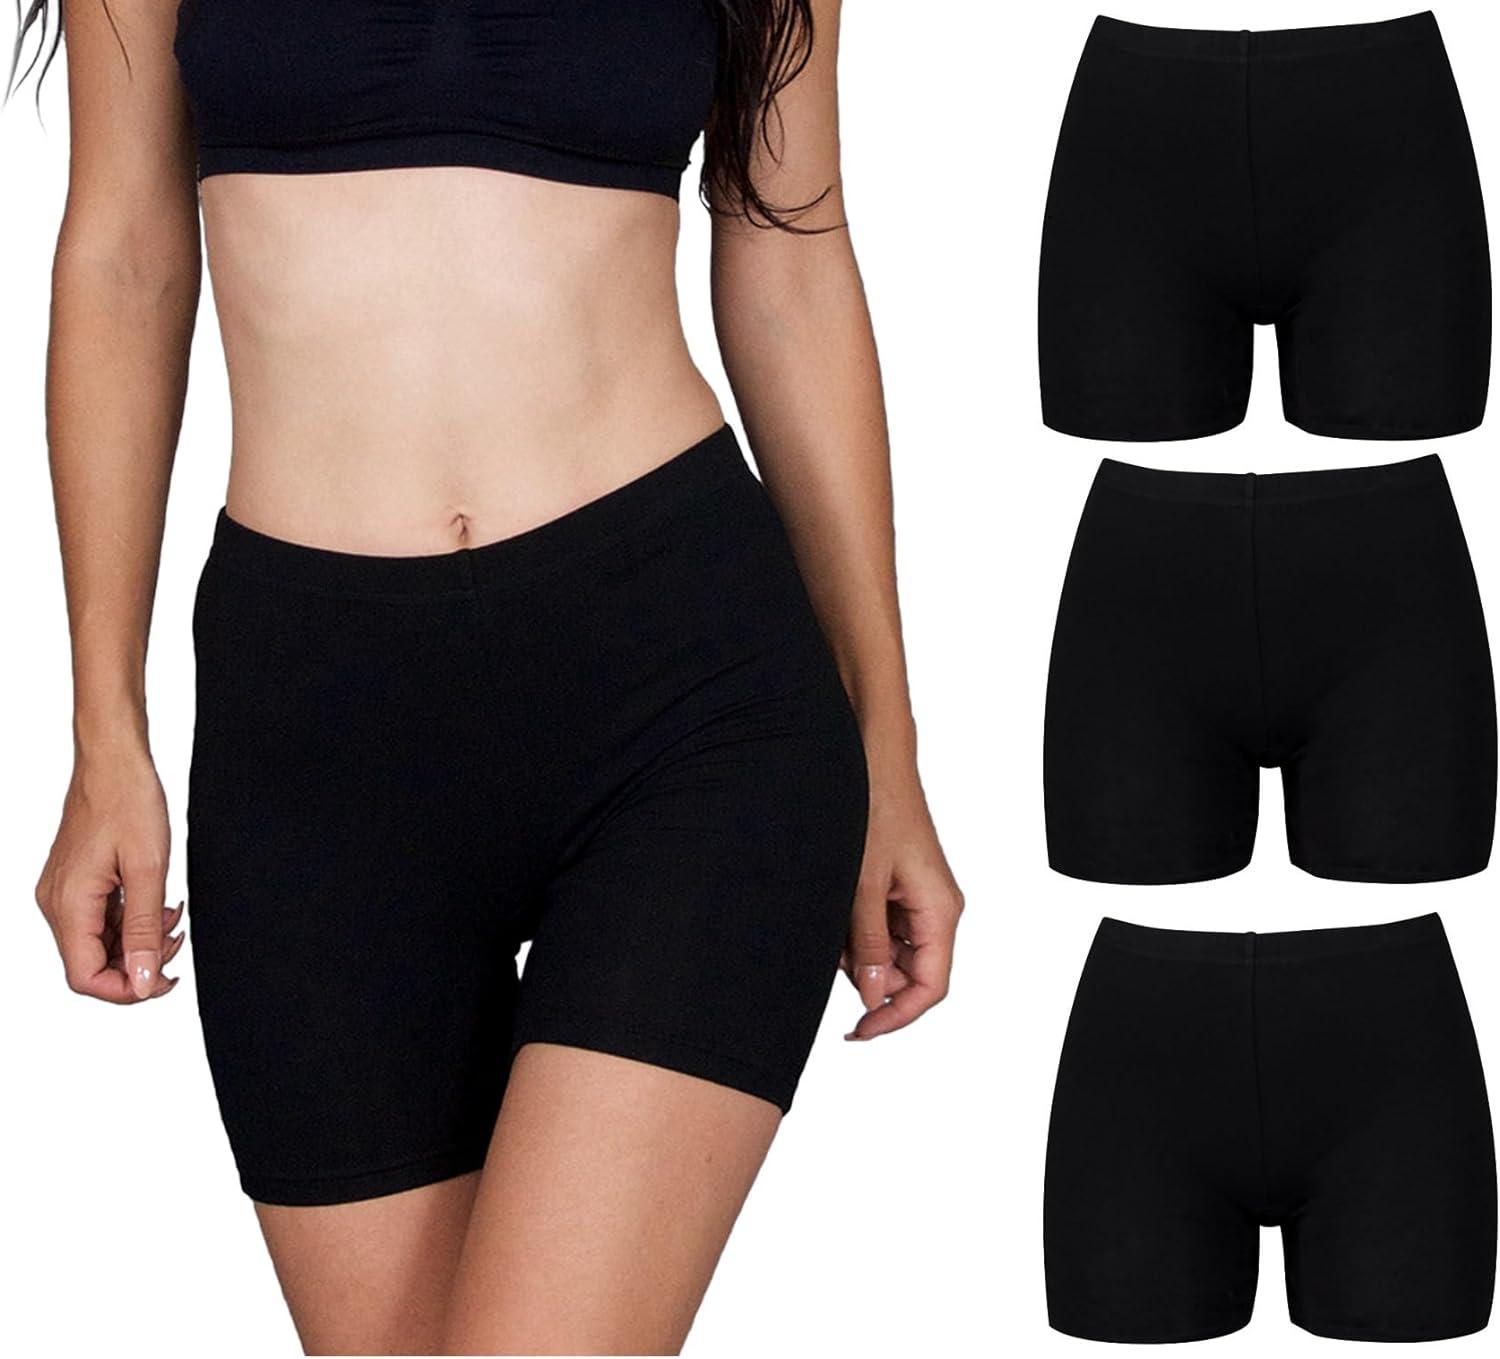 Emprella Slip Shorts for Women Under Dress Cotton Bike Shorts 3 Pack for $7.99